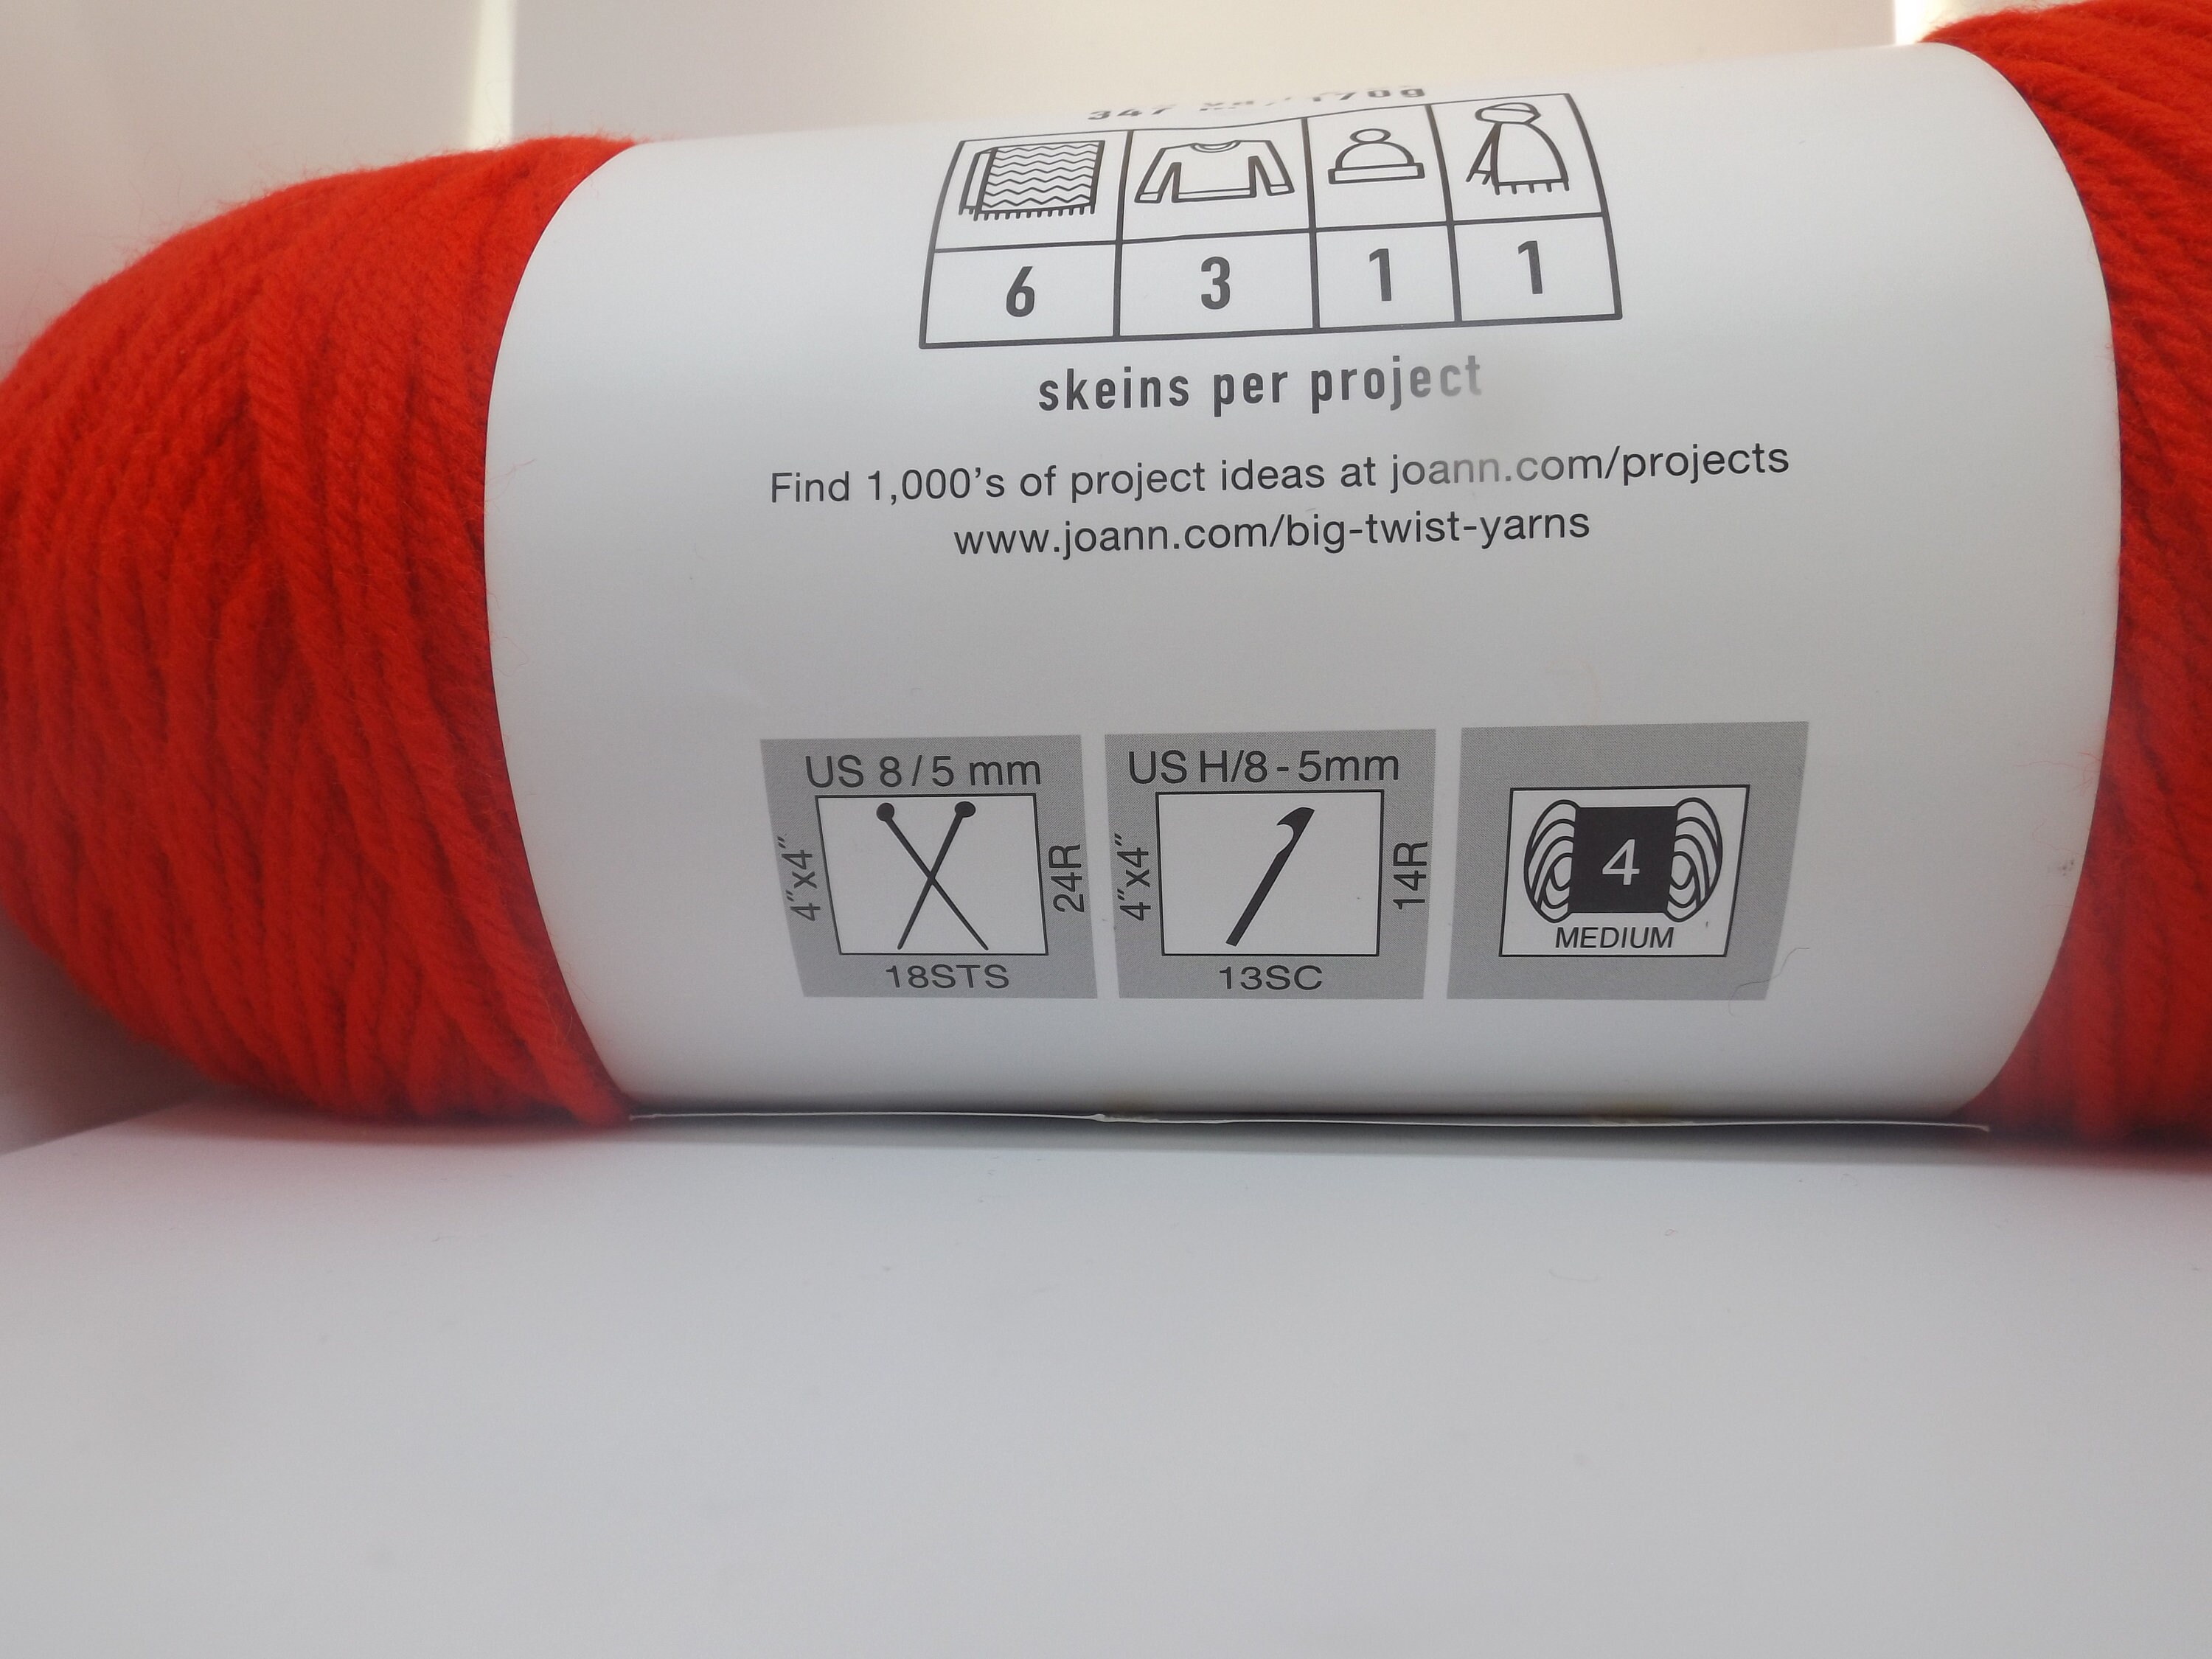 2 Pk Big Twist Yarn Value Pack 20% Wool, 80% Acrylic Color Red